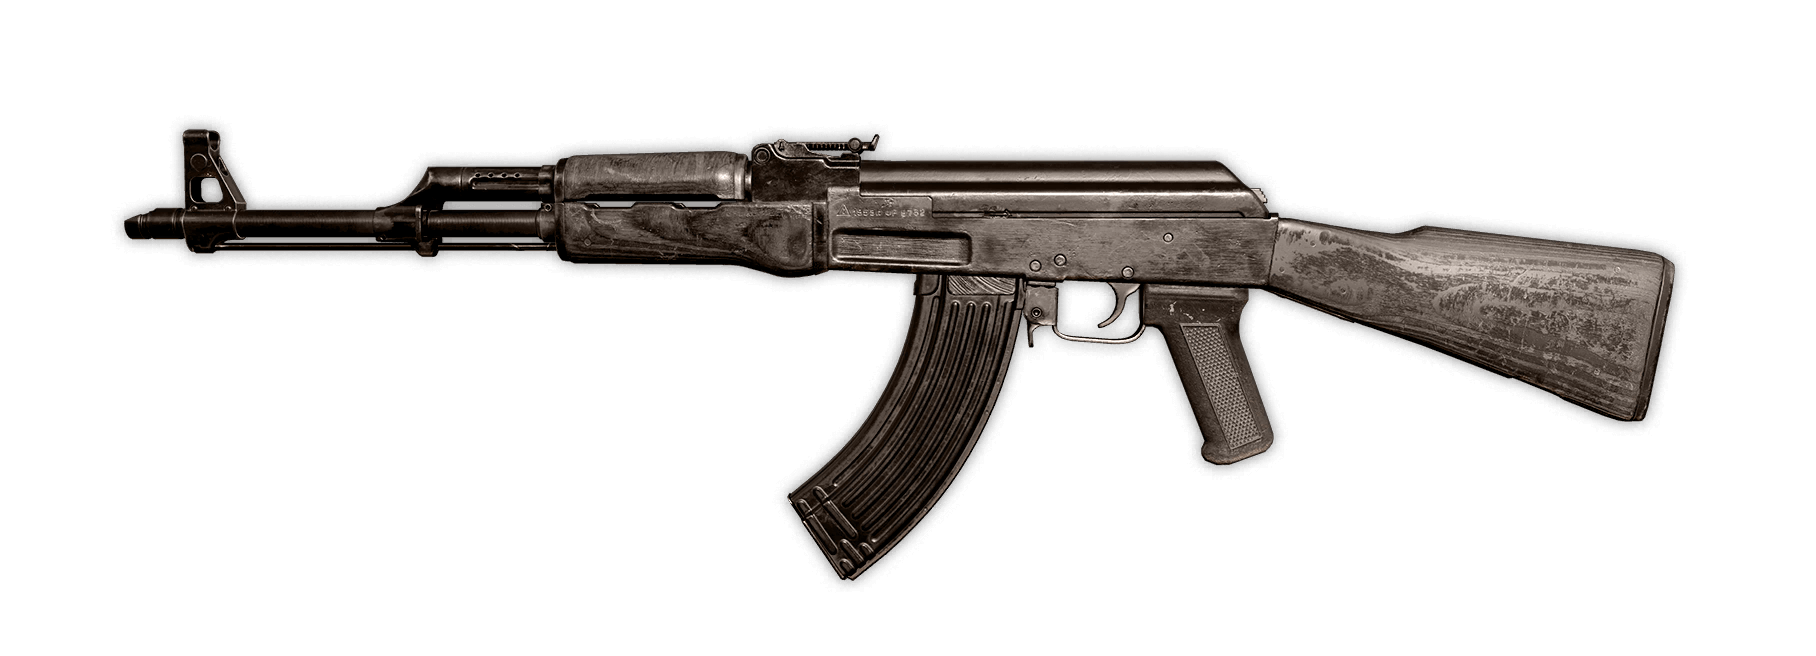 Image of AK-47